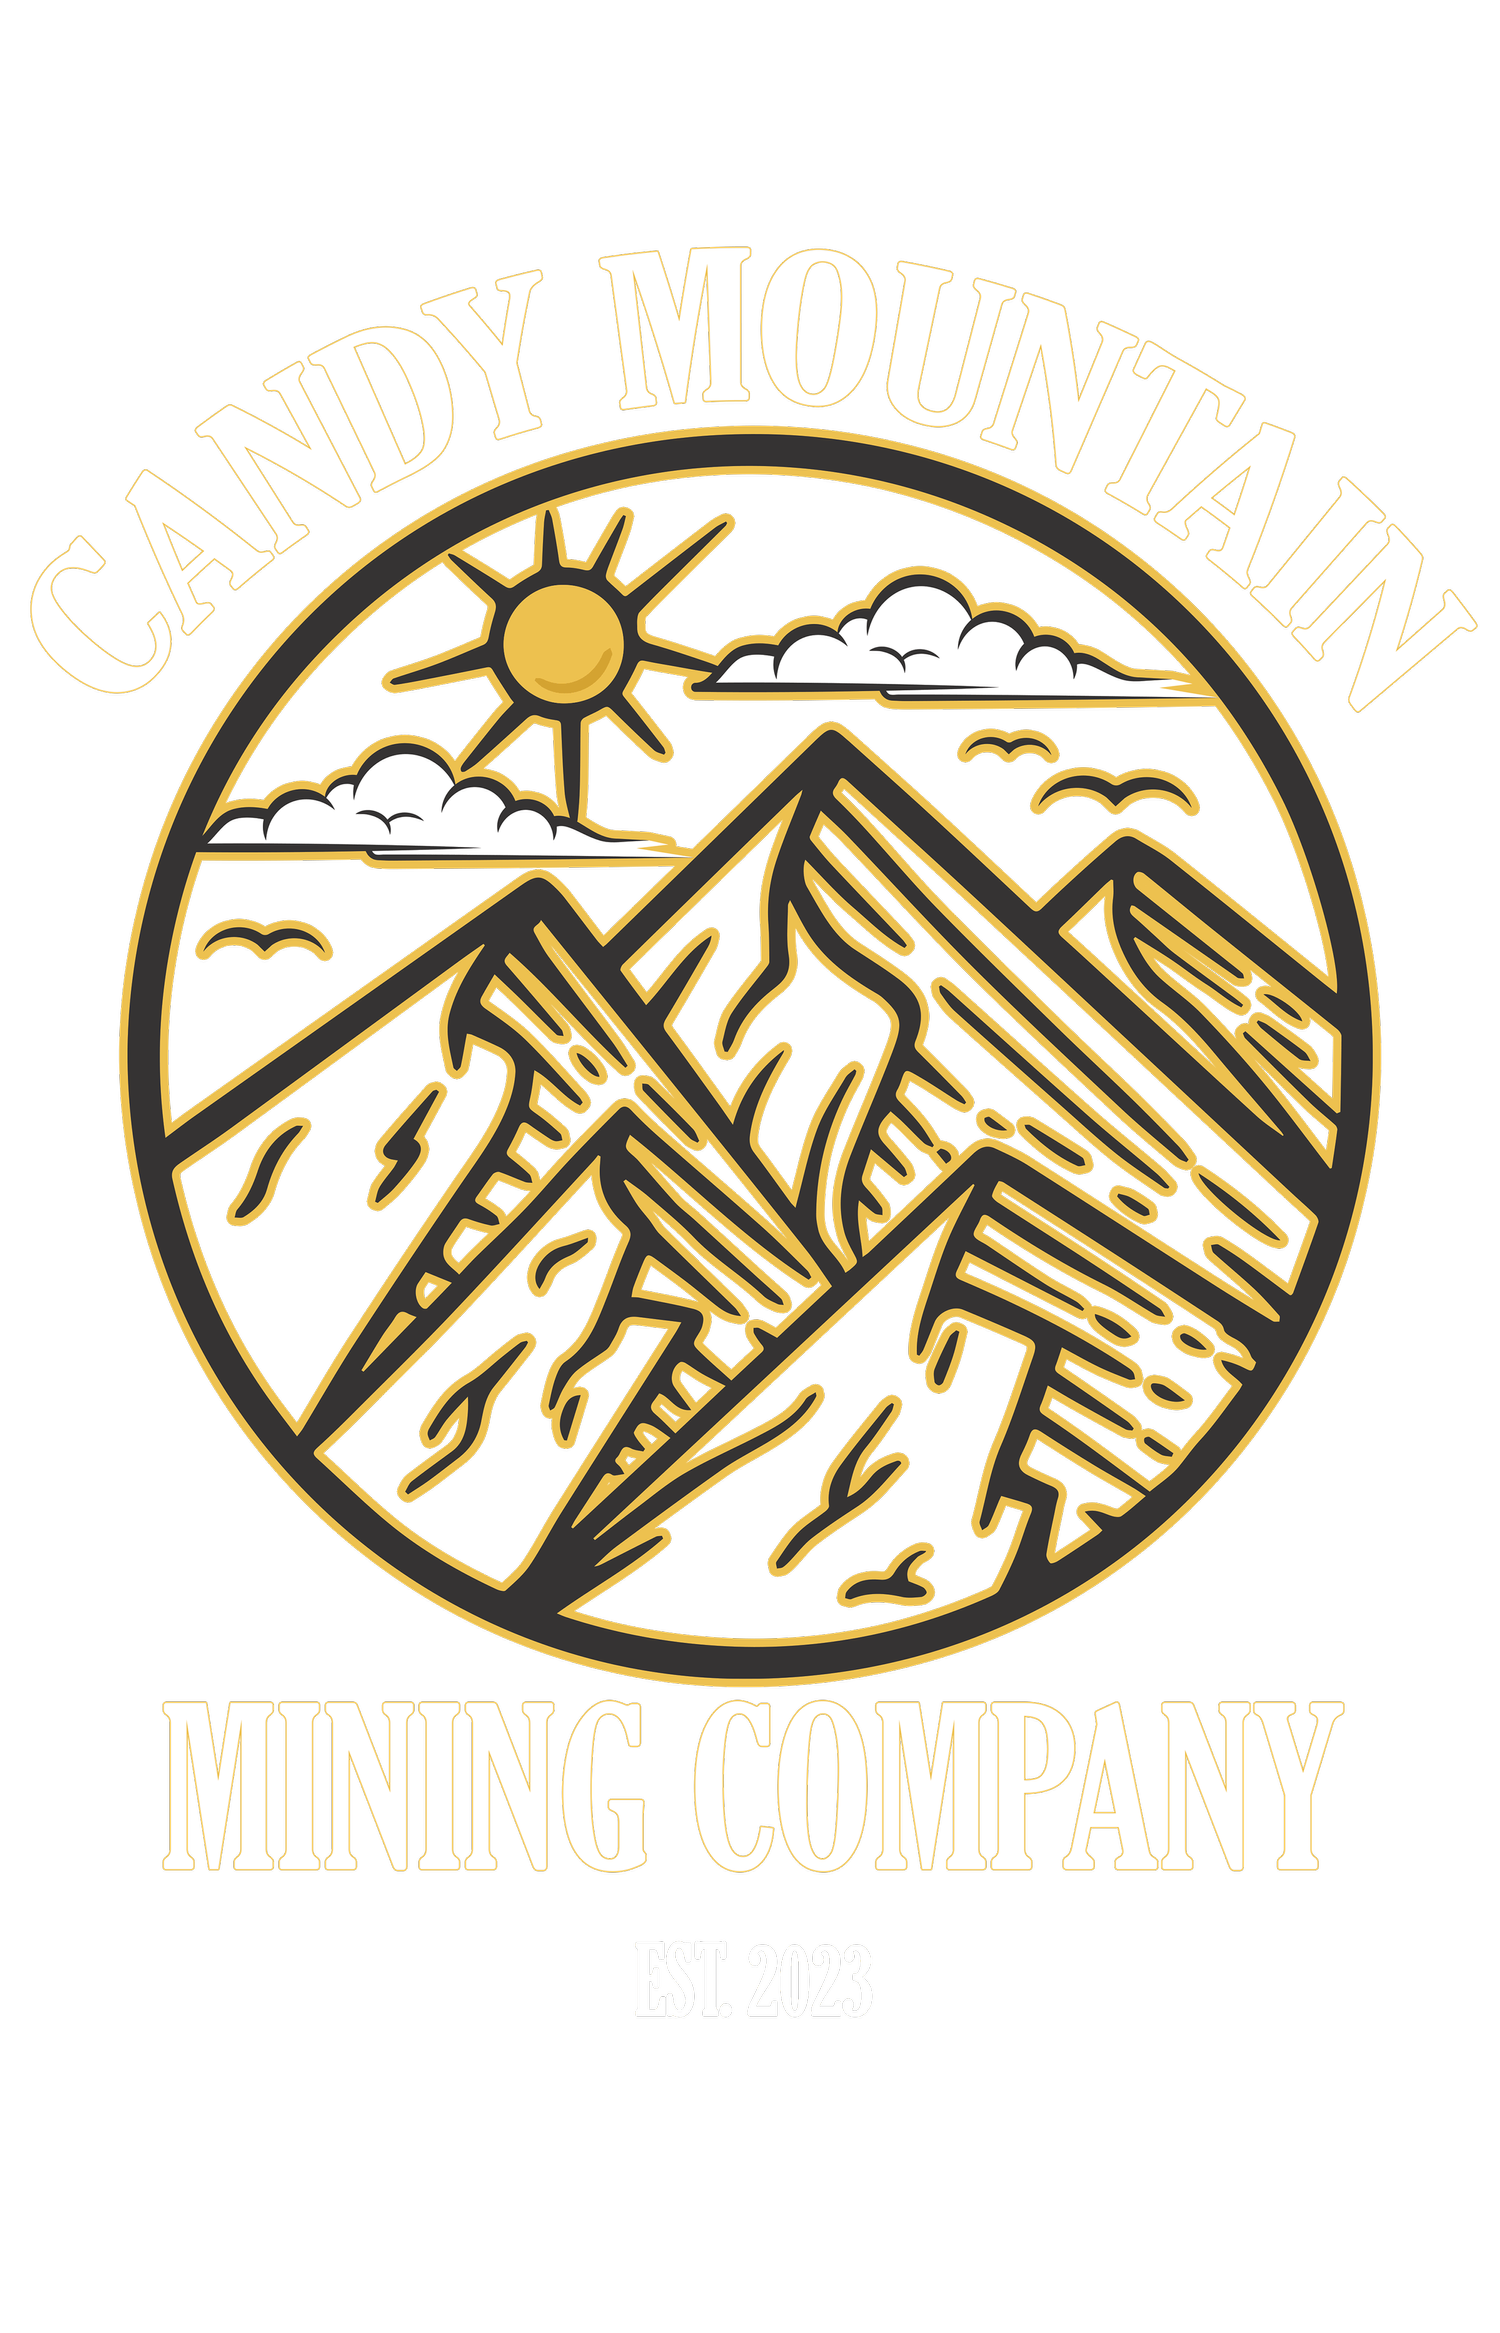 Candy Mountain Mining Company